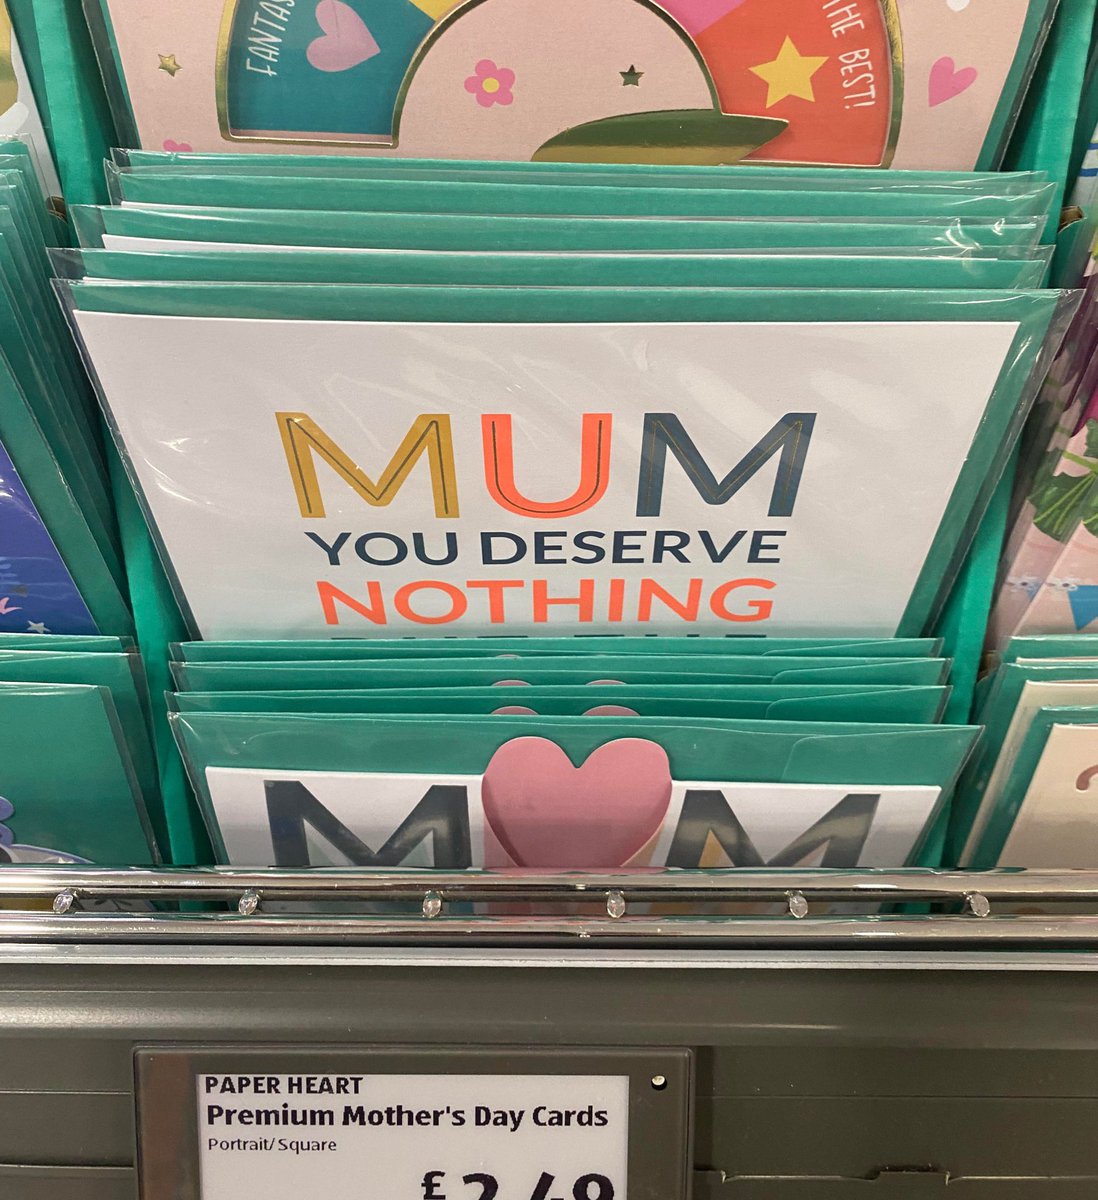 Seems a bit harsh #MothersDay